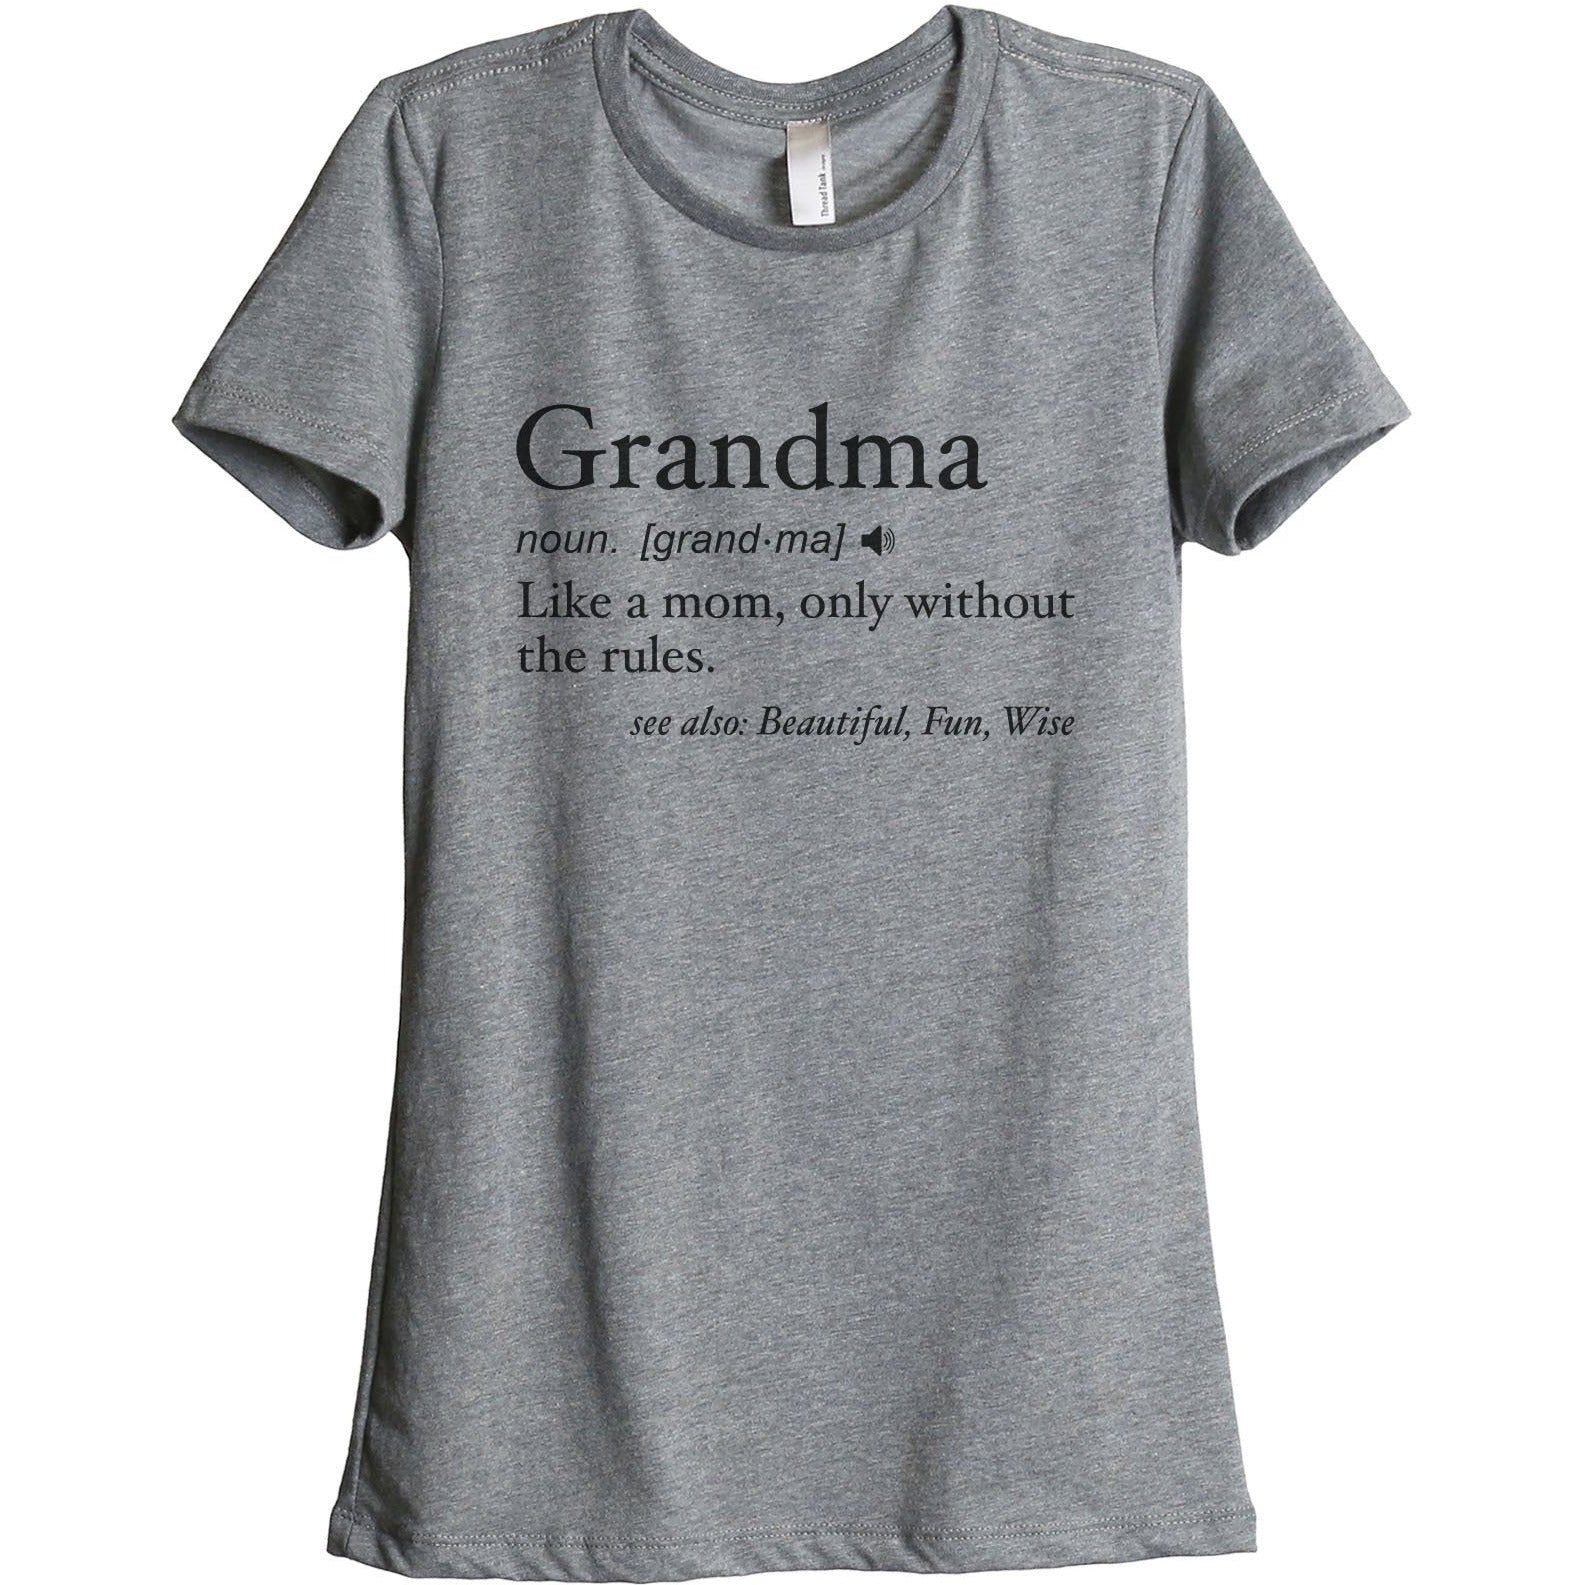 Grandma Definition - Thread Tank | Stories You Can Wear | T-Shirts, Tank Tops and Sweatshirts